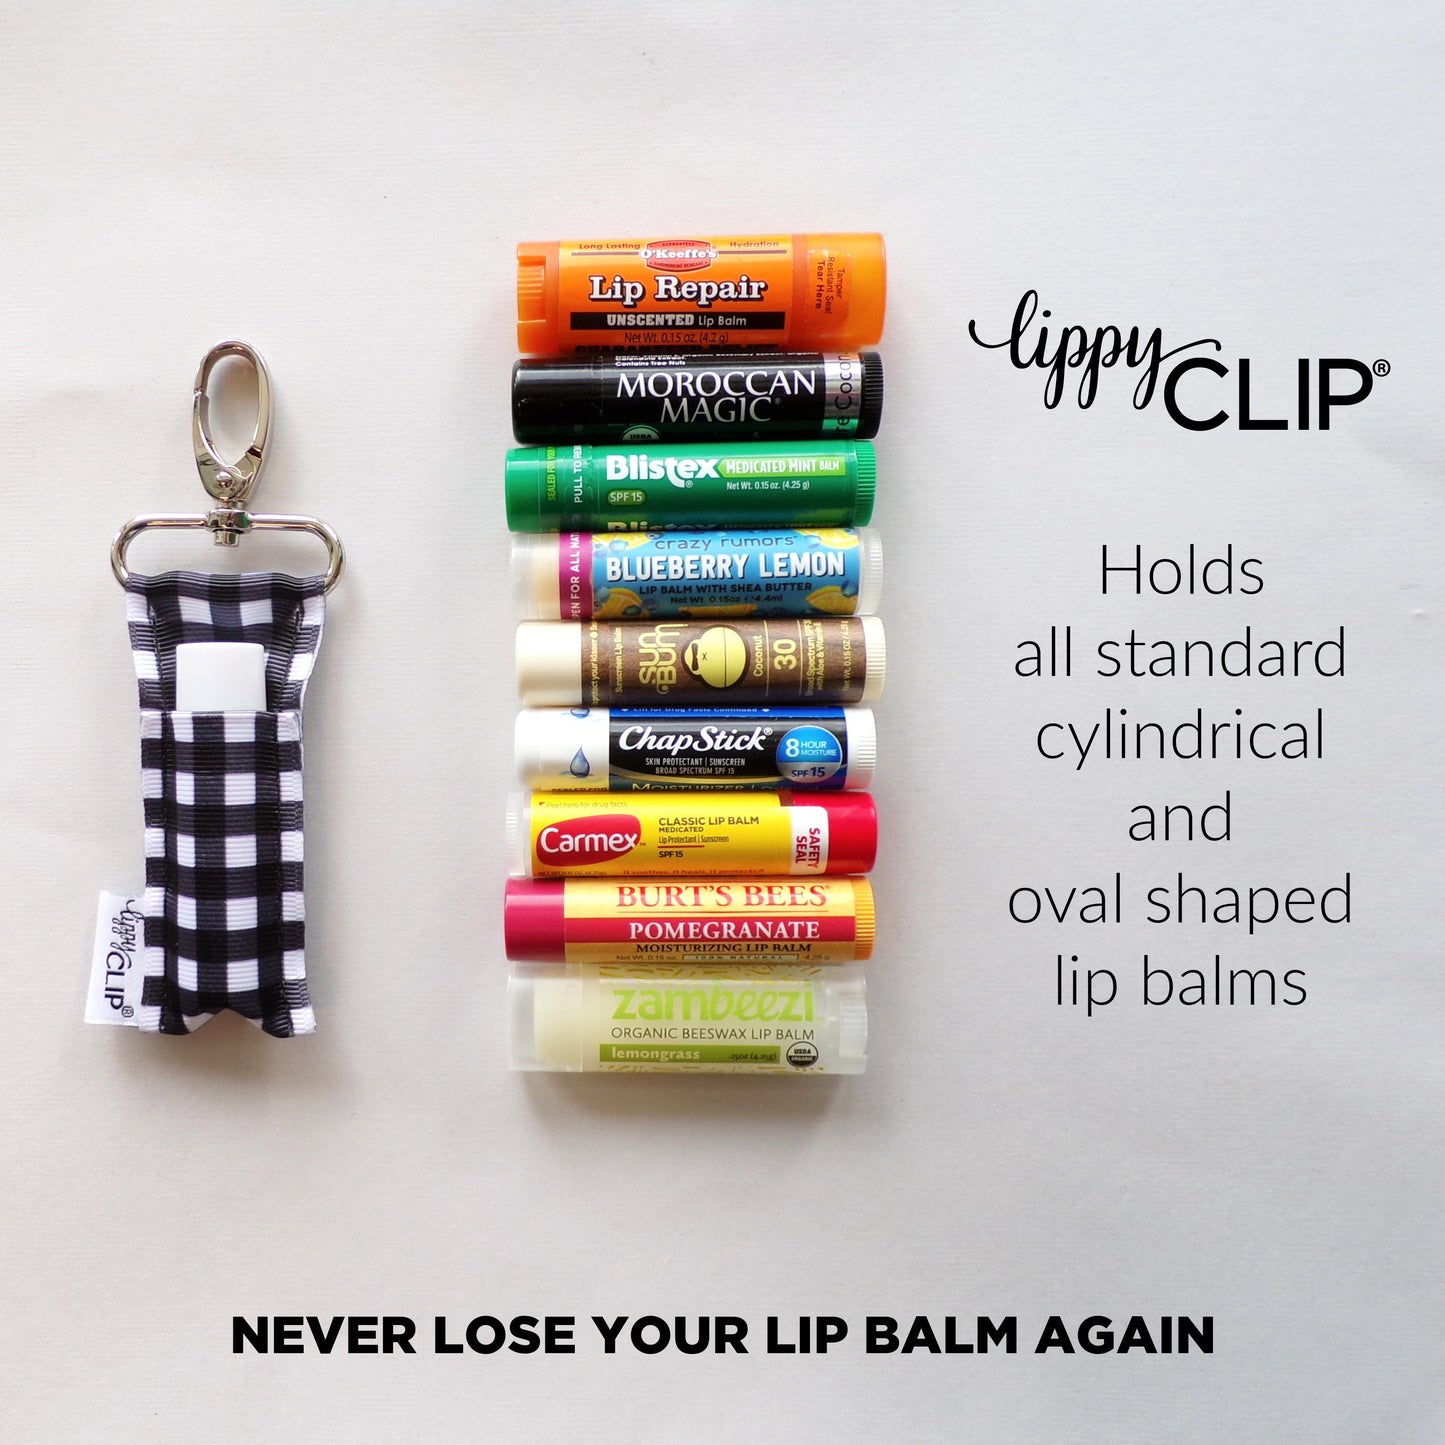 Elephants LippyClip® Lip Balm Holder